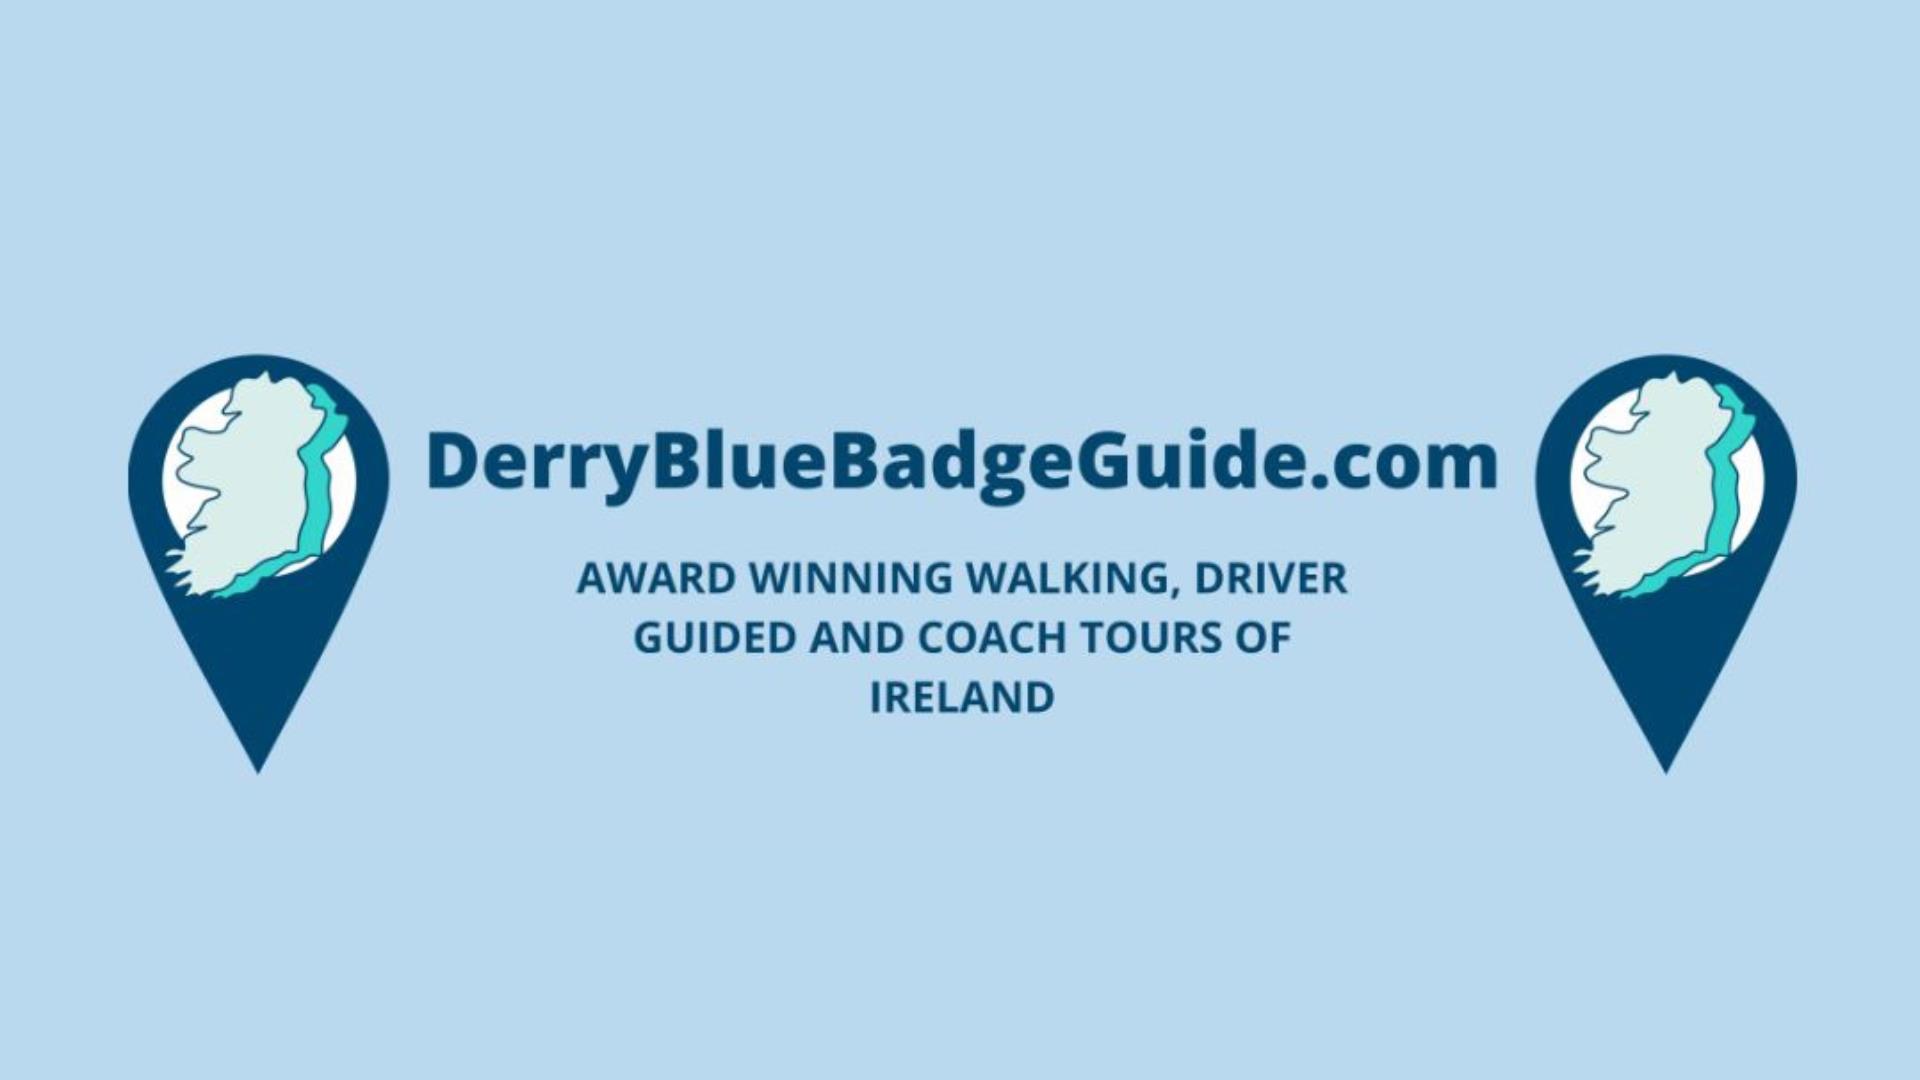 Derry Blue Badge Guide Logo.